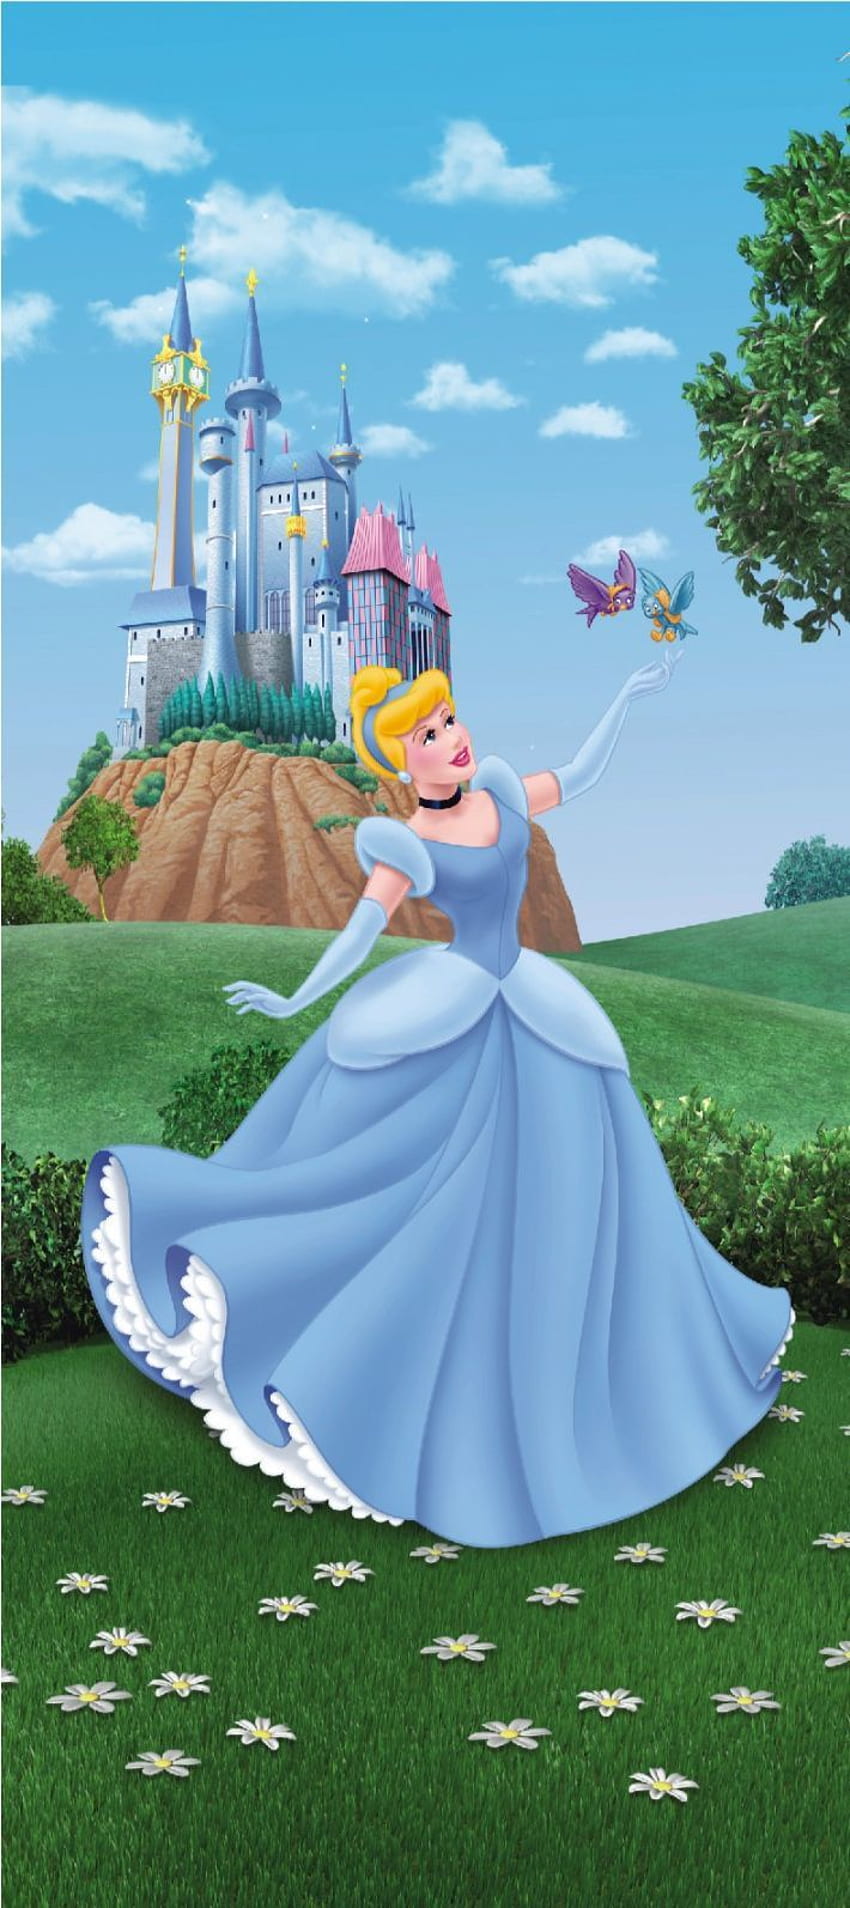 Disney Princess Cinderella Premium wall murals. Buy it now HD phone wallpaper